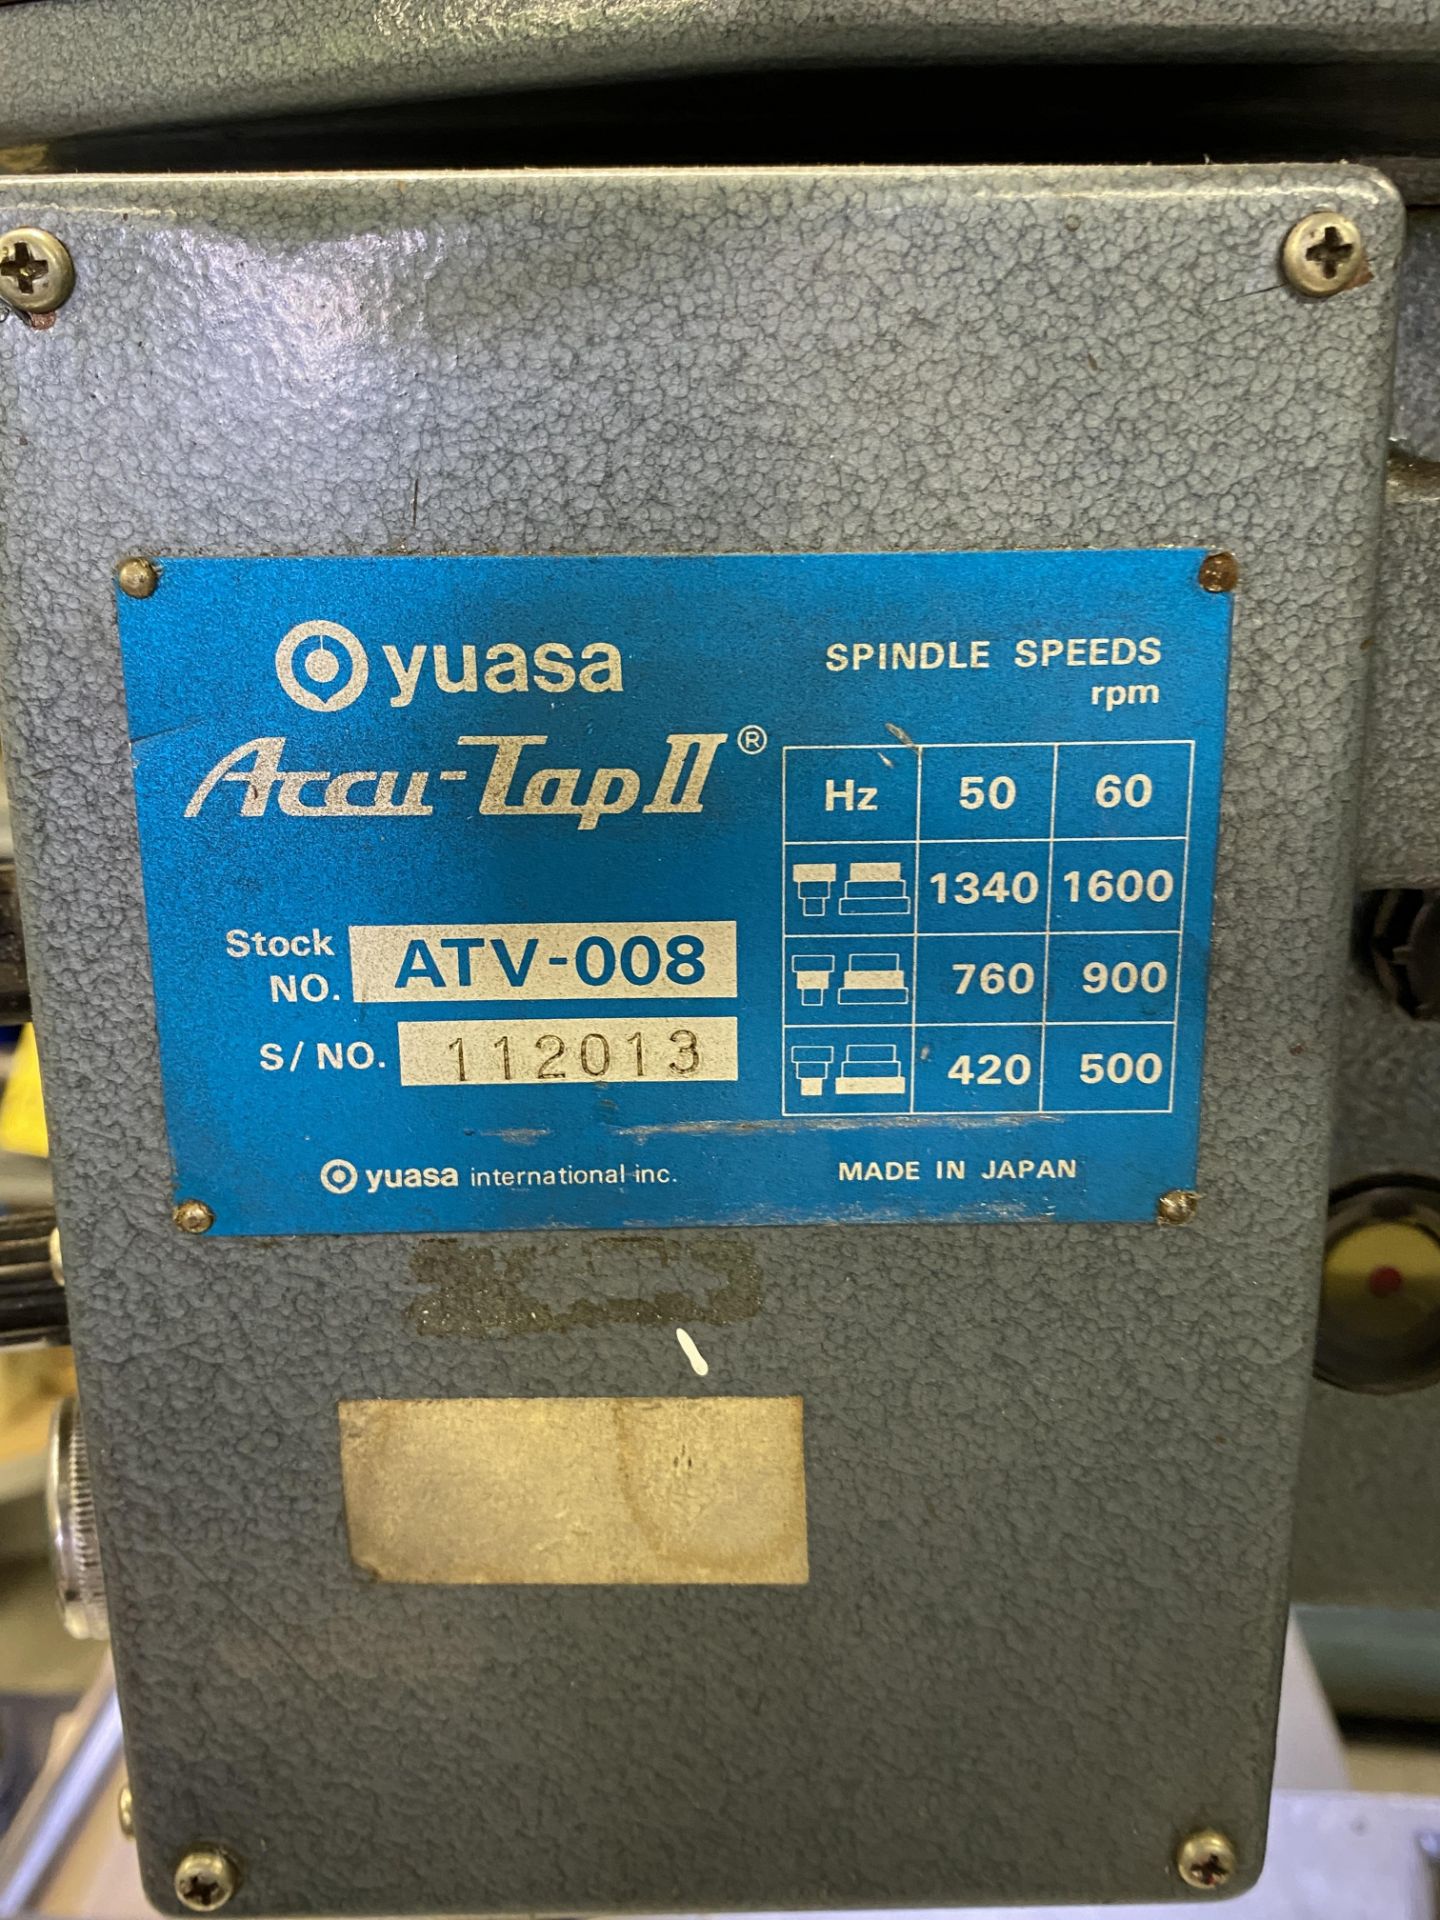 Yuasa, M: ATV-008 Accu-Tap II with Work Bench Tapping Machine, SN: 112013 - Image 3 of 3